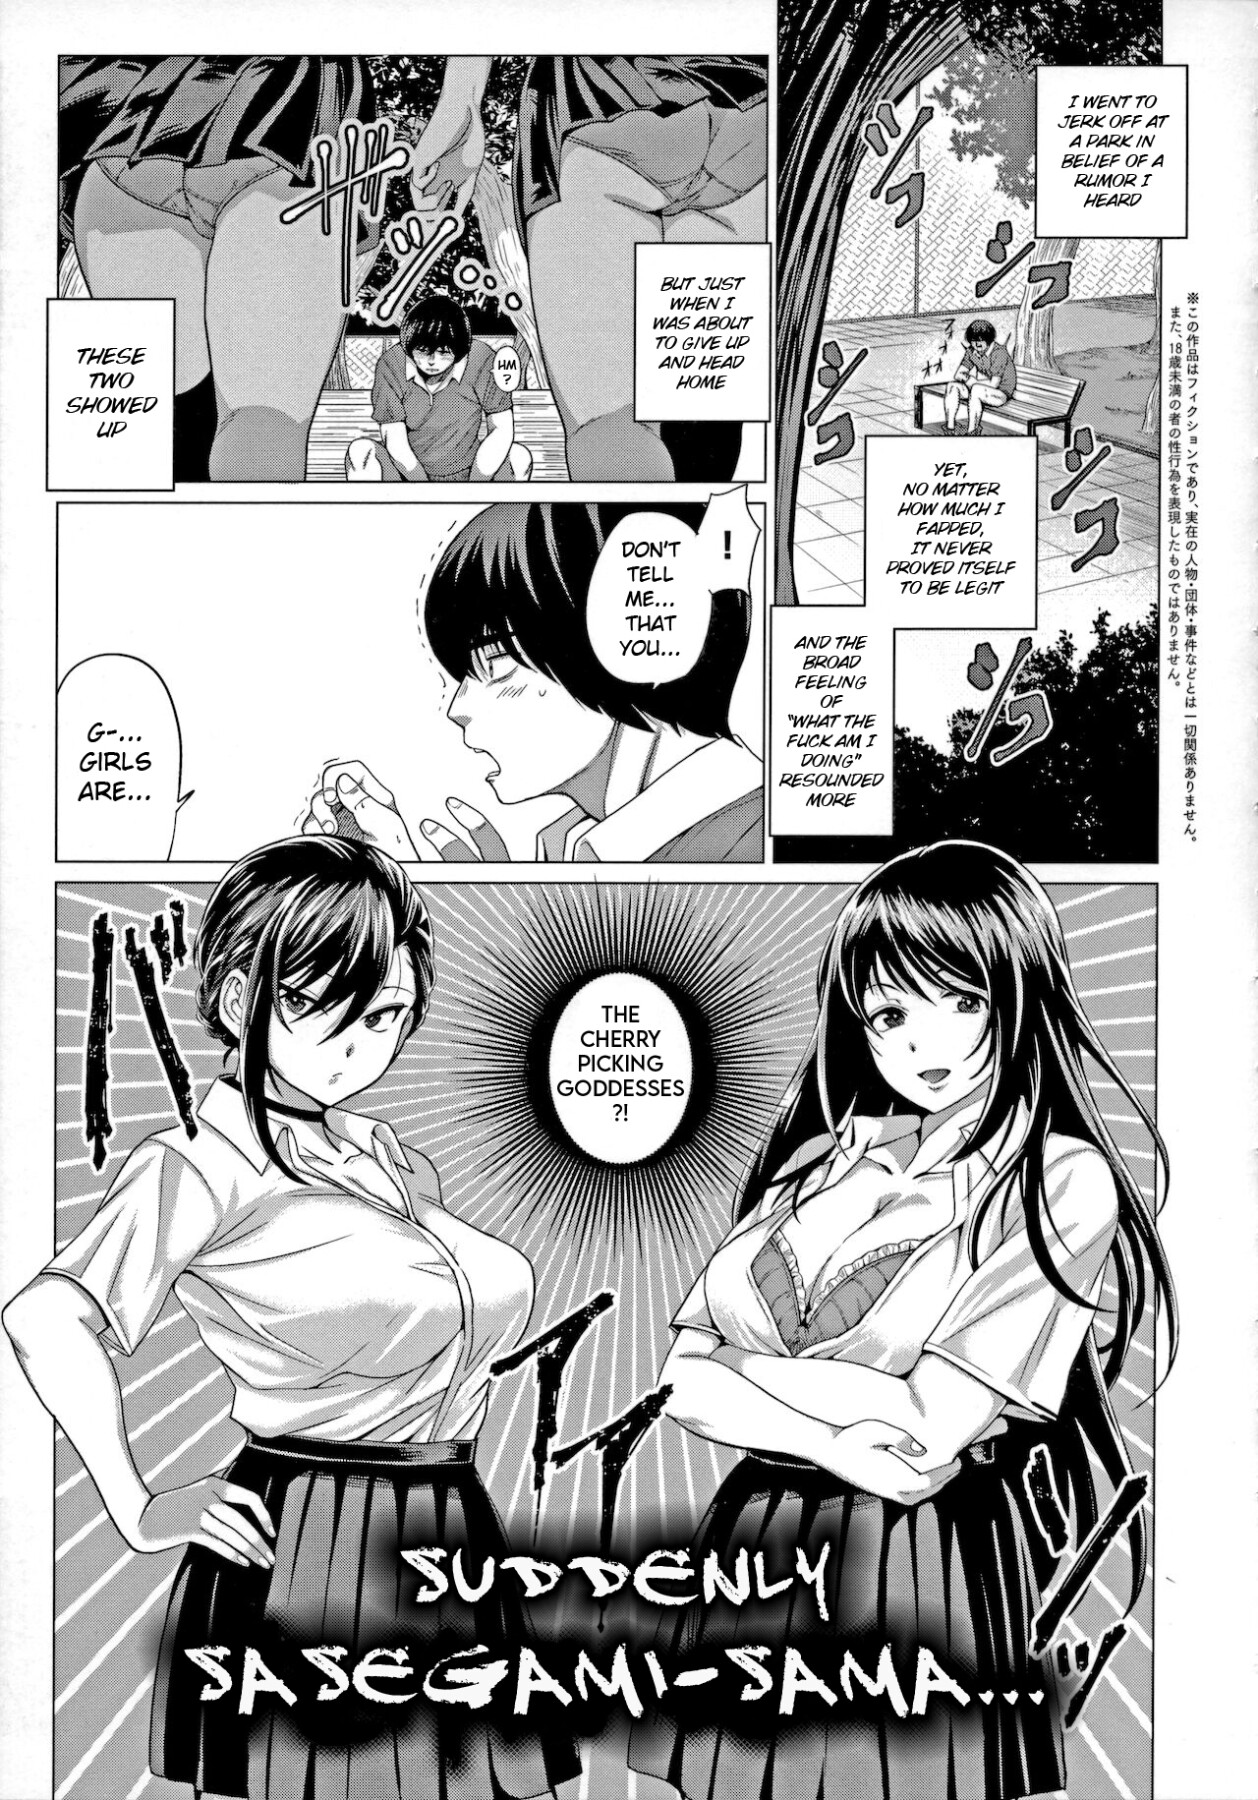 Hentai Manga Comic-Suddenly Sasegami-sama...-Read-1